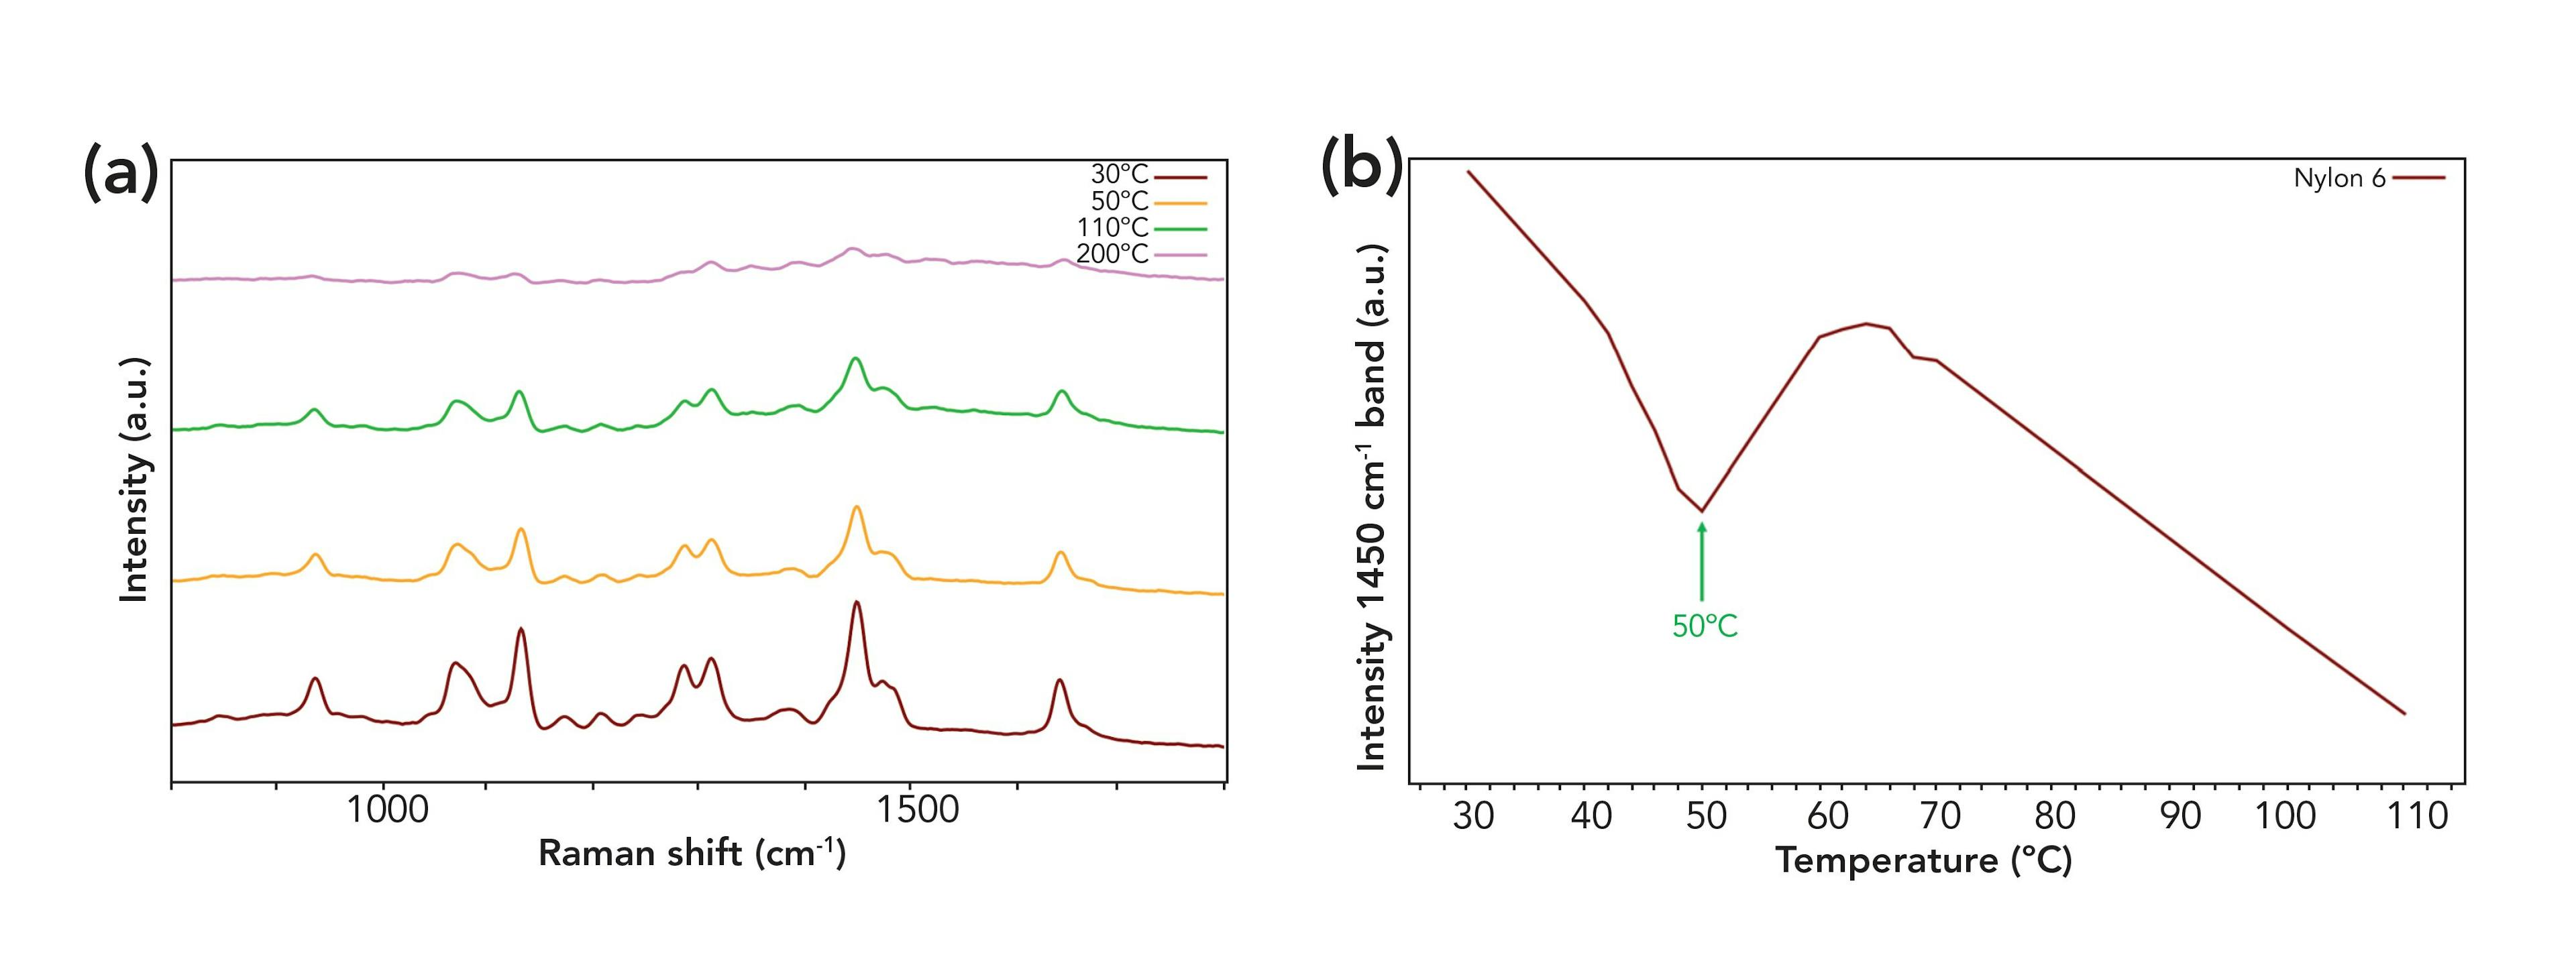 Figure 2: a) Raman spectra of nylon-6 at increasing temperatures, b) Intensity of 1450 cm-1 band at increasing temperature for nylon-6.